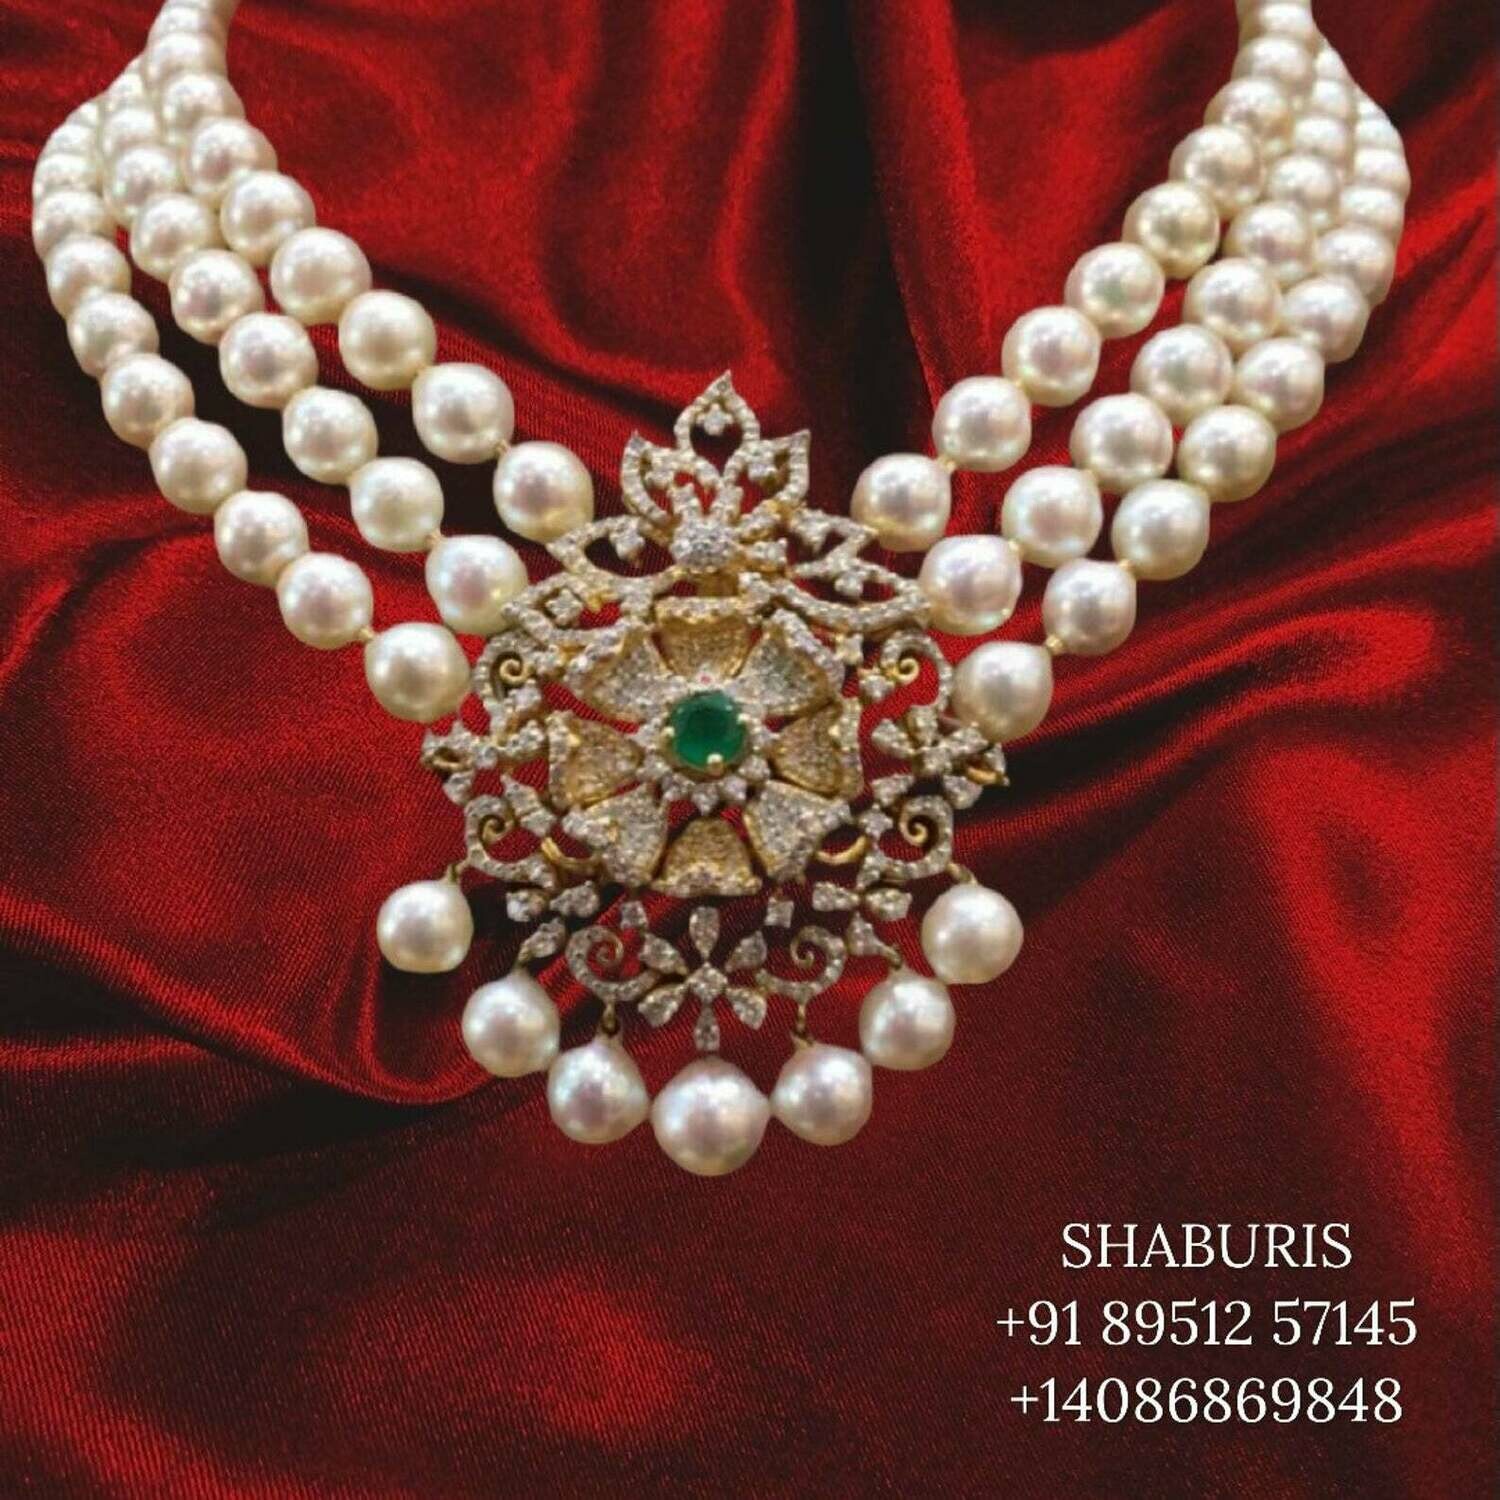 Latest Indian Jewelry,Pure Silver Jewellery Indian ,pearl pendent,charm jewelry,Indian Bridal,Indian Wedding Jewelry-NIHIRA-SHABURIS